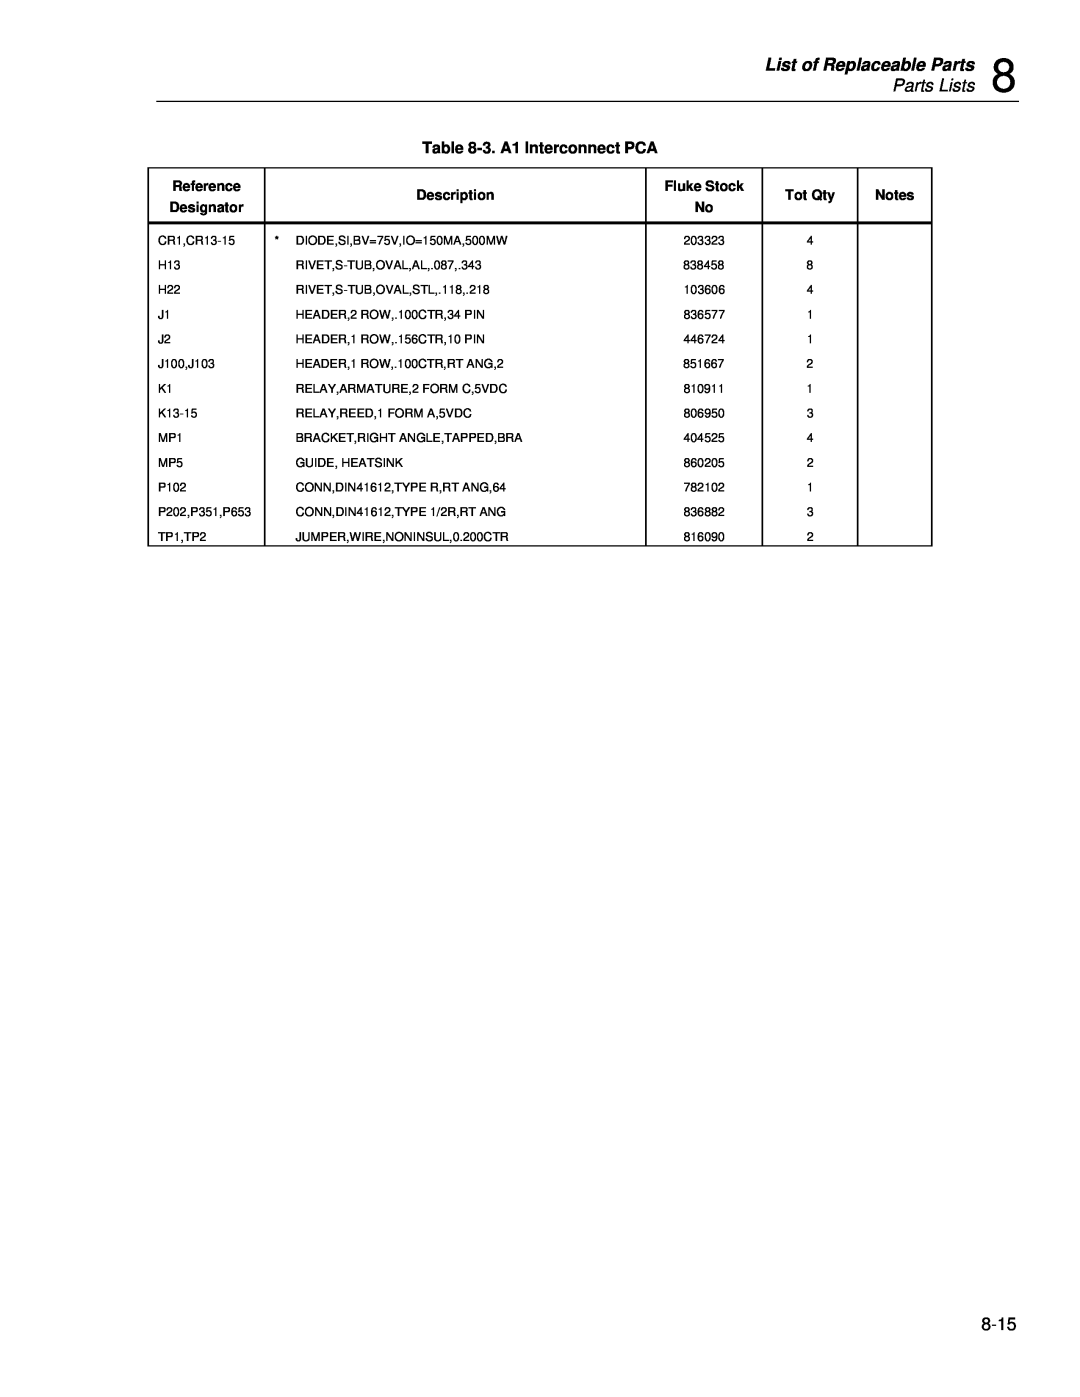 Fluke 5725A instruction manual List of Replaceable Parts, Parts Lists, 3.A1 Interconnect PCA 